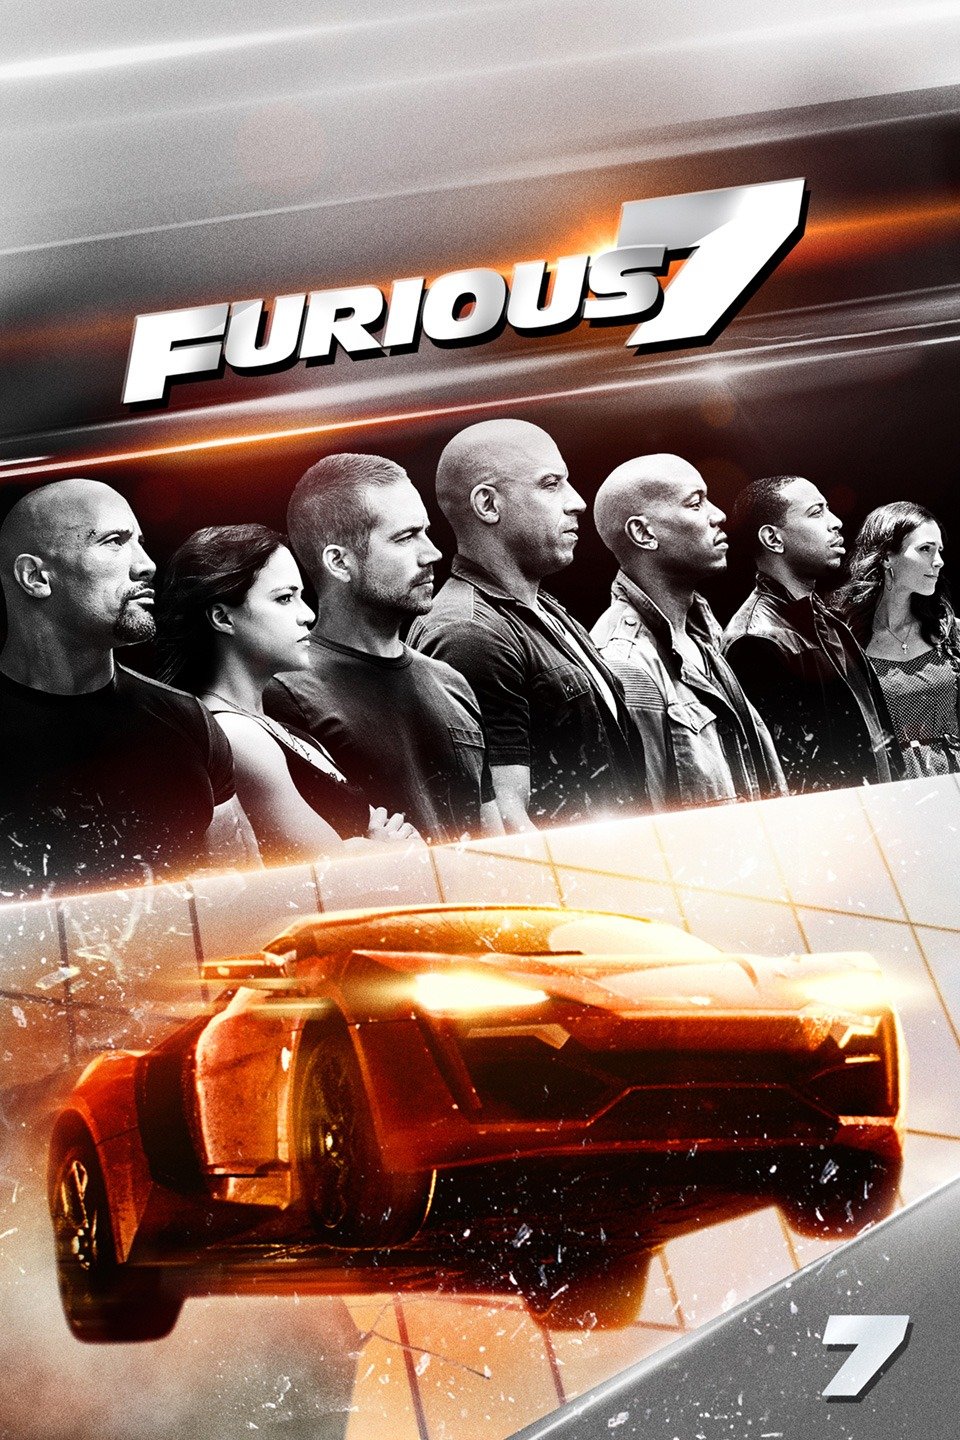 [Mini-HD] Furious 7 (2015) เร็ว…แรงทะลุนรก ภาค 7 [1080P] [พากย์ไทย DTS + อังกฤษ DTS] [BluRay.DTS.x264] [บรรยายไทย + อังกฤษ] [เสียงไทย + ซับไทย] [ONE2UP]